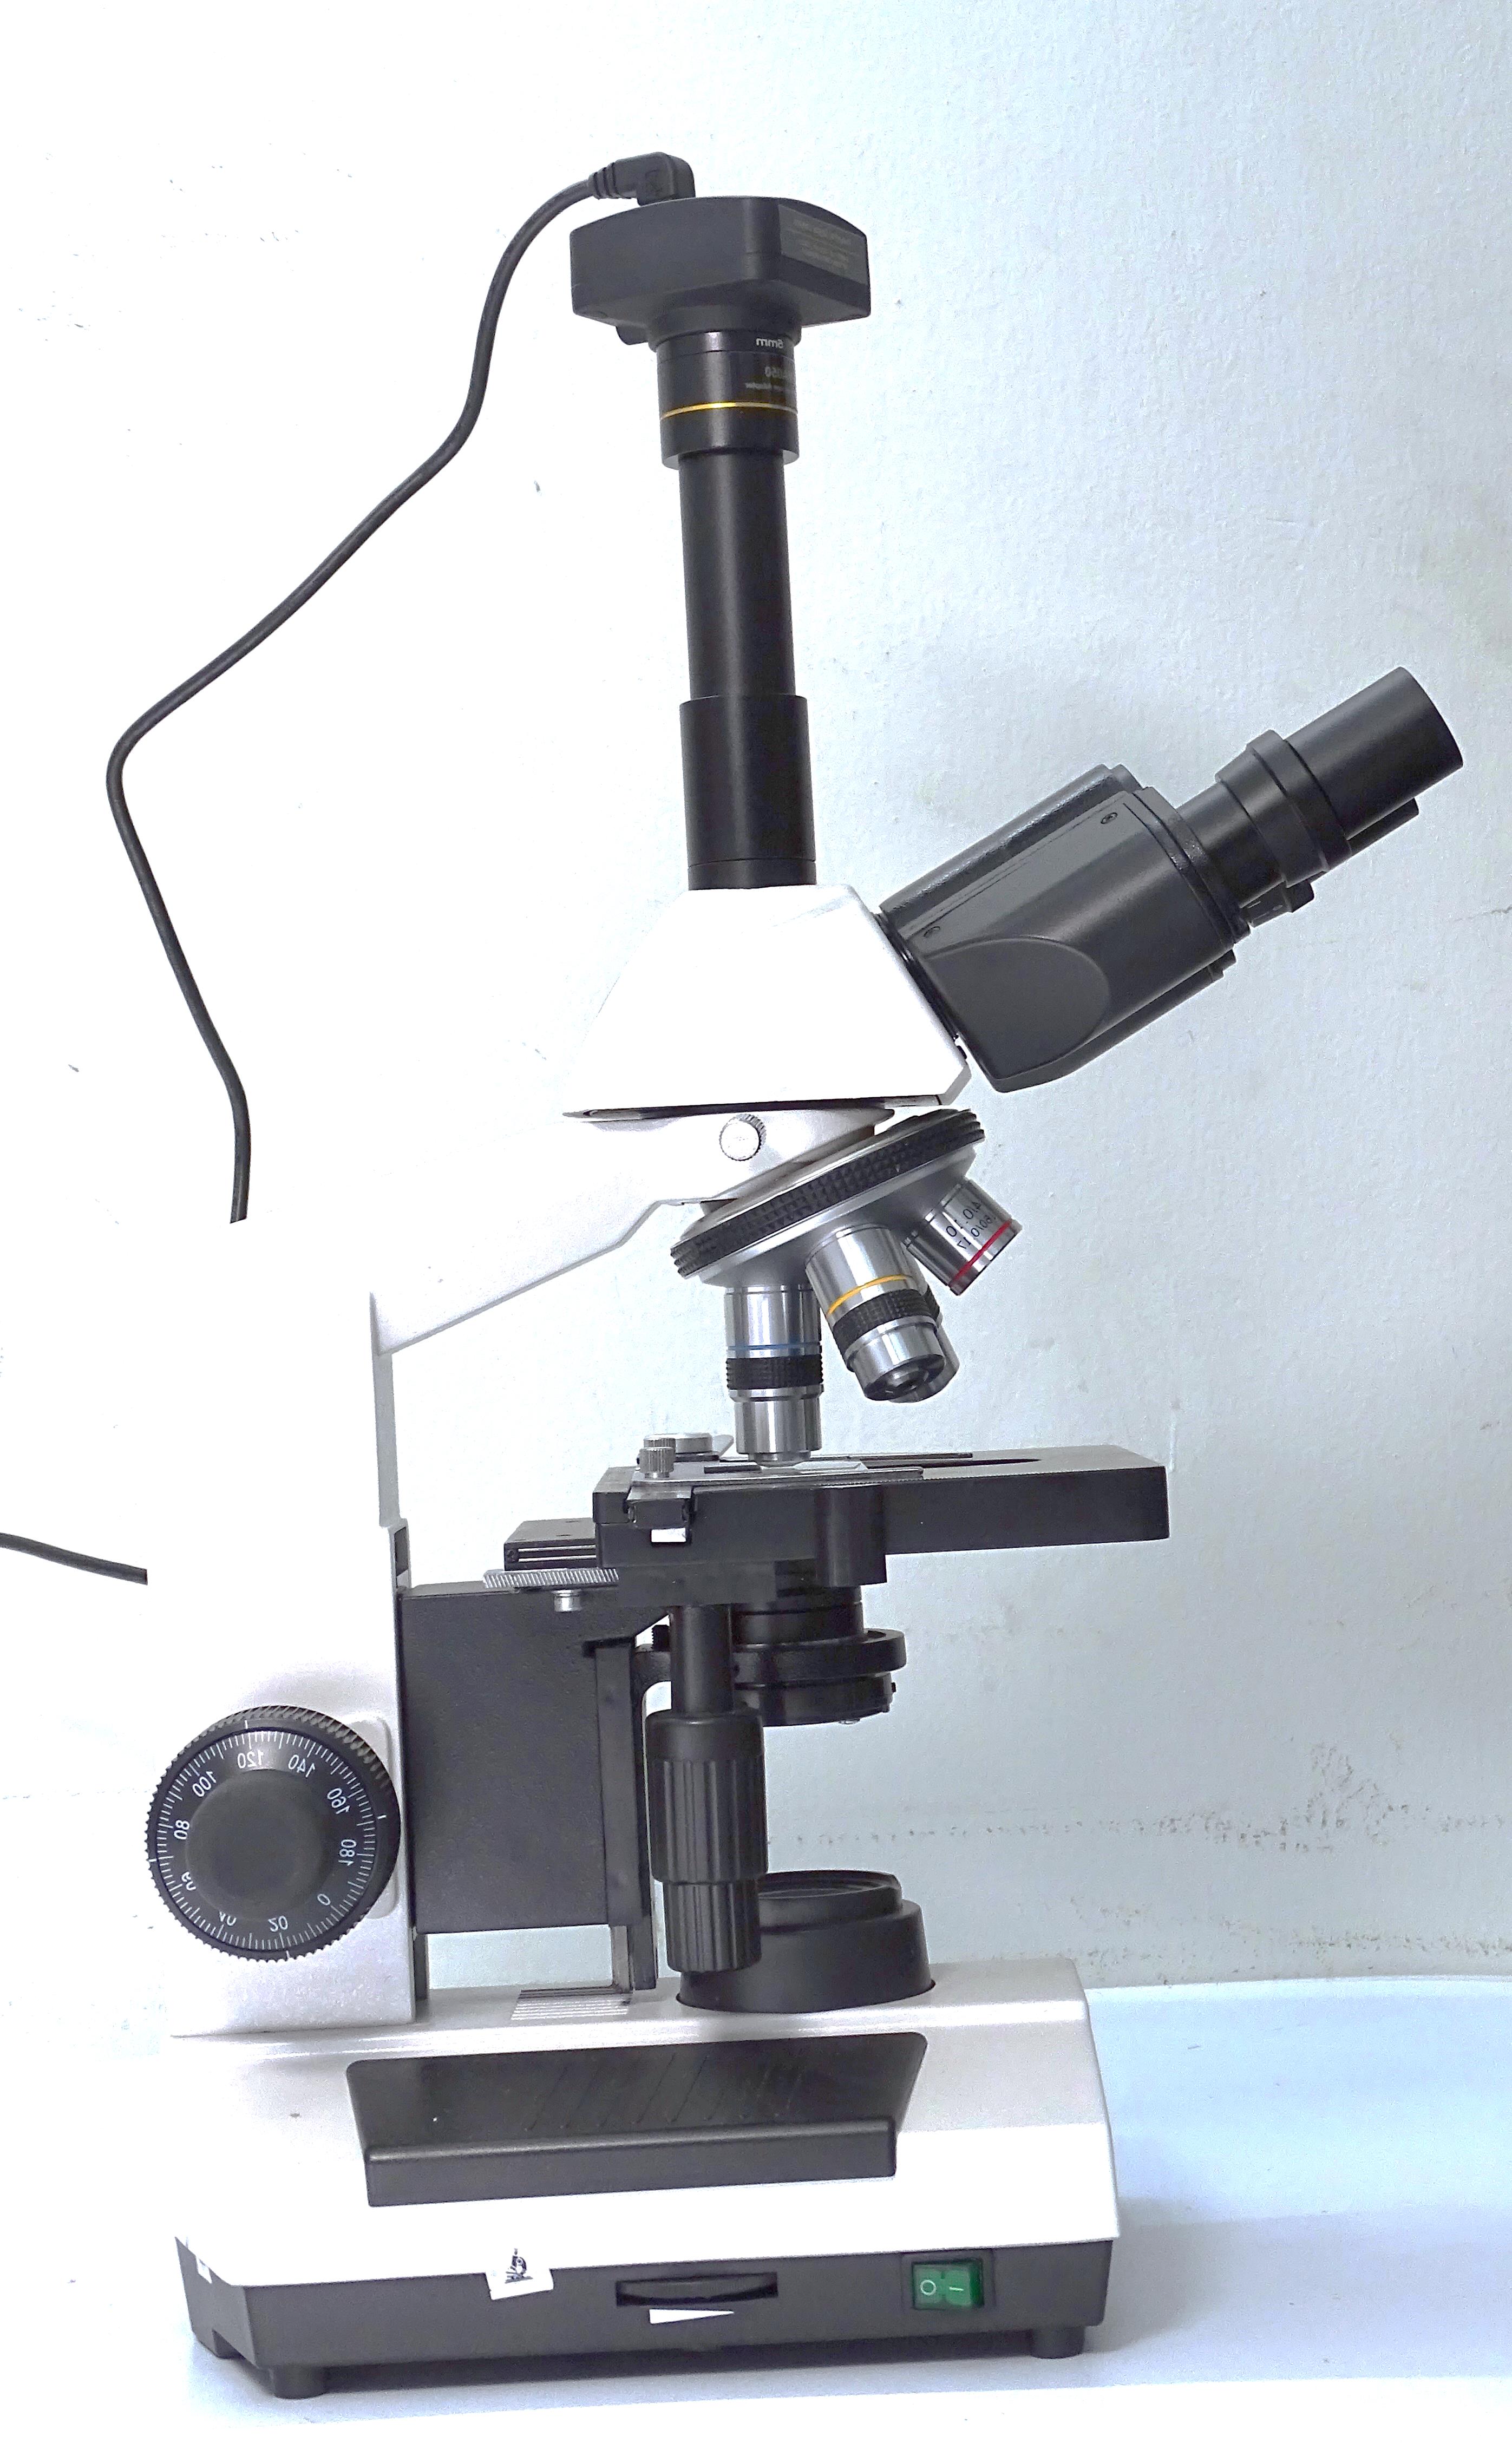 tl_files/2020/Microscopio digital Microscopiodigital con oculares frontales.jpg